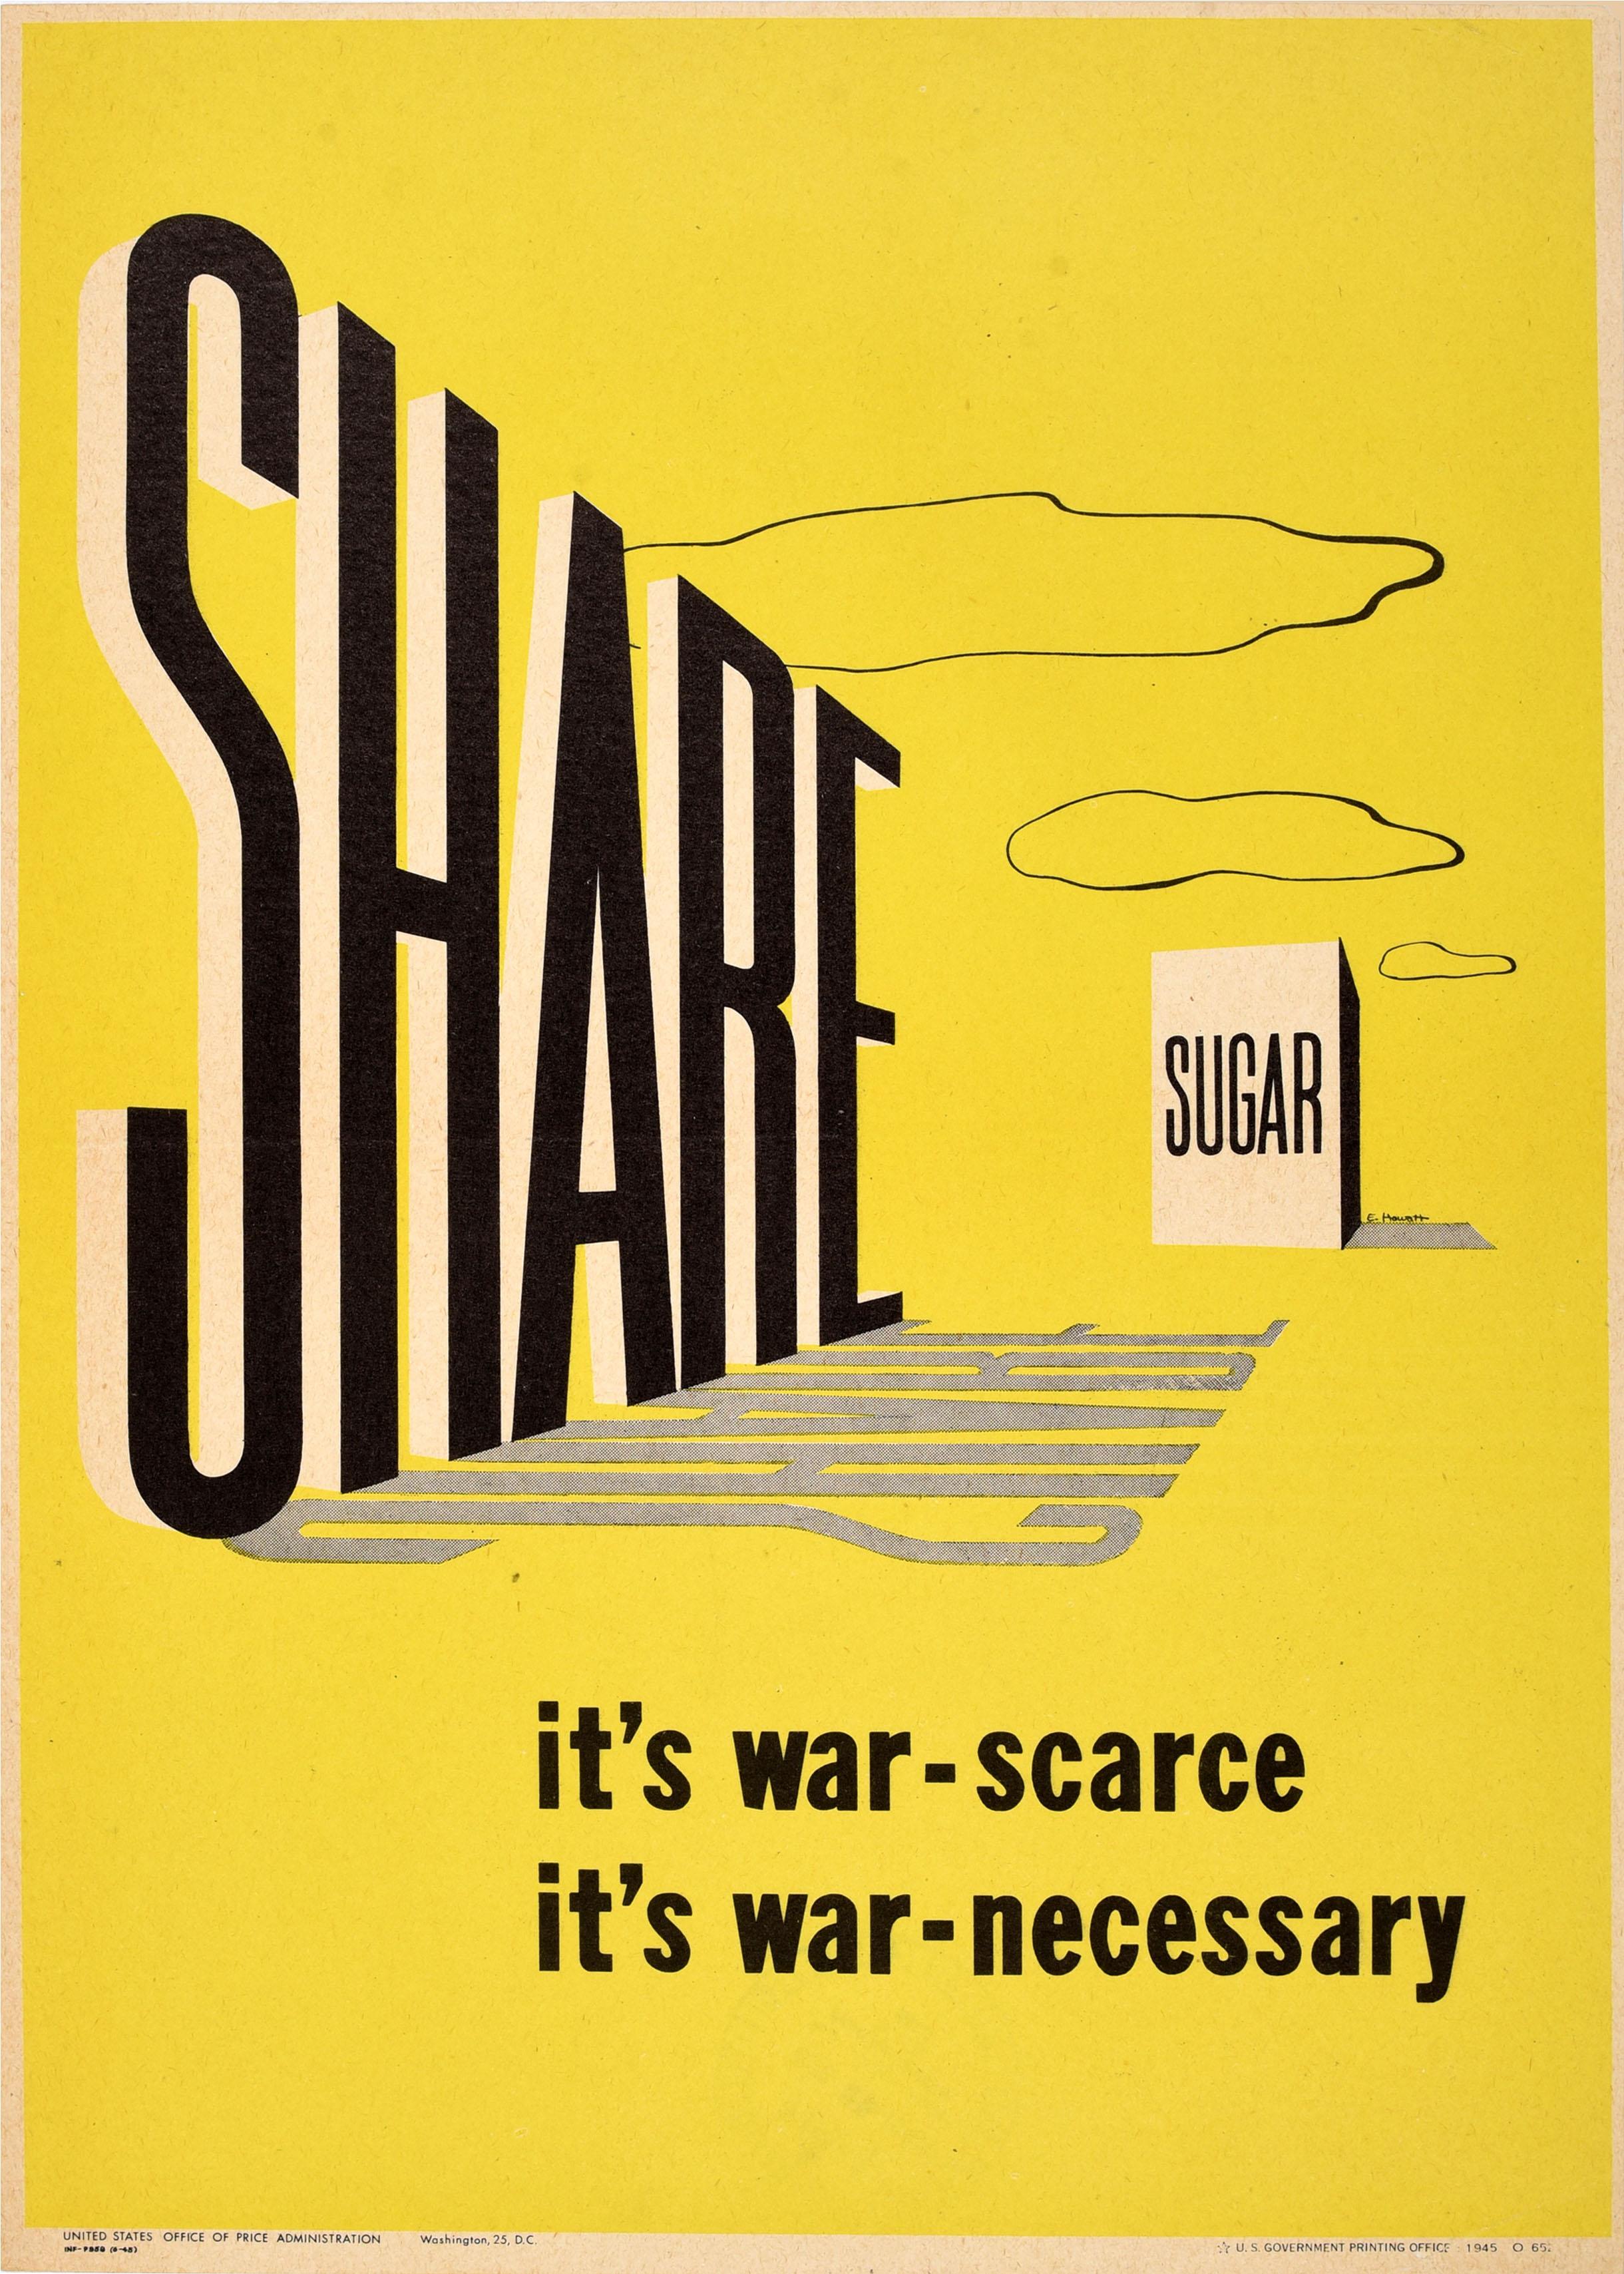 Unknown Print - Original Vintage War Propaganda Poster Share Sugar WWII Modernism US Rationing